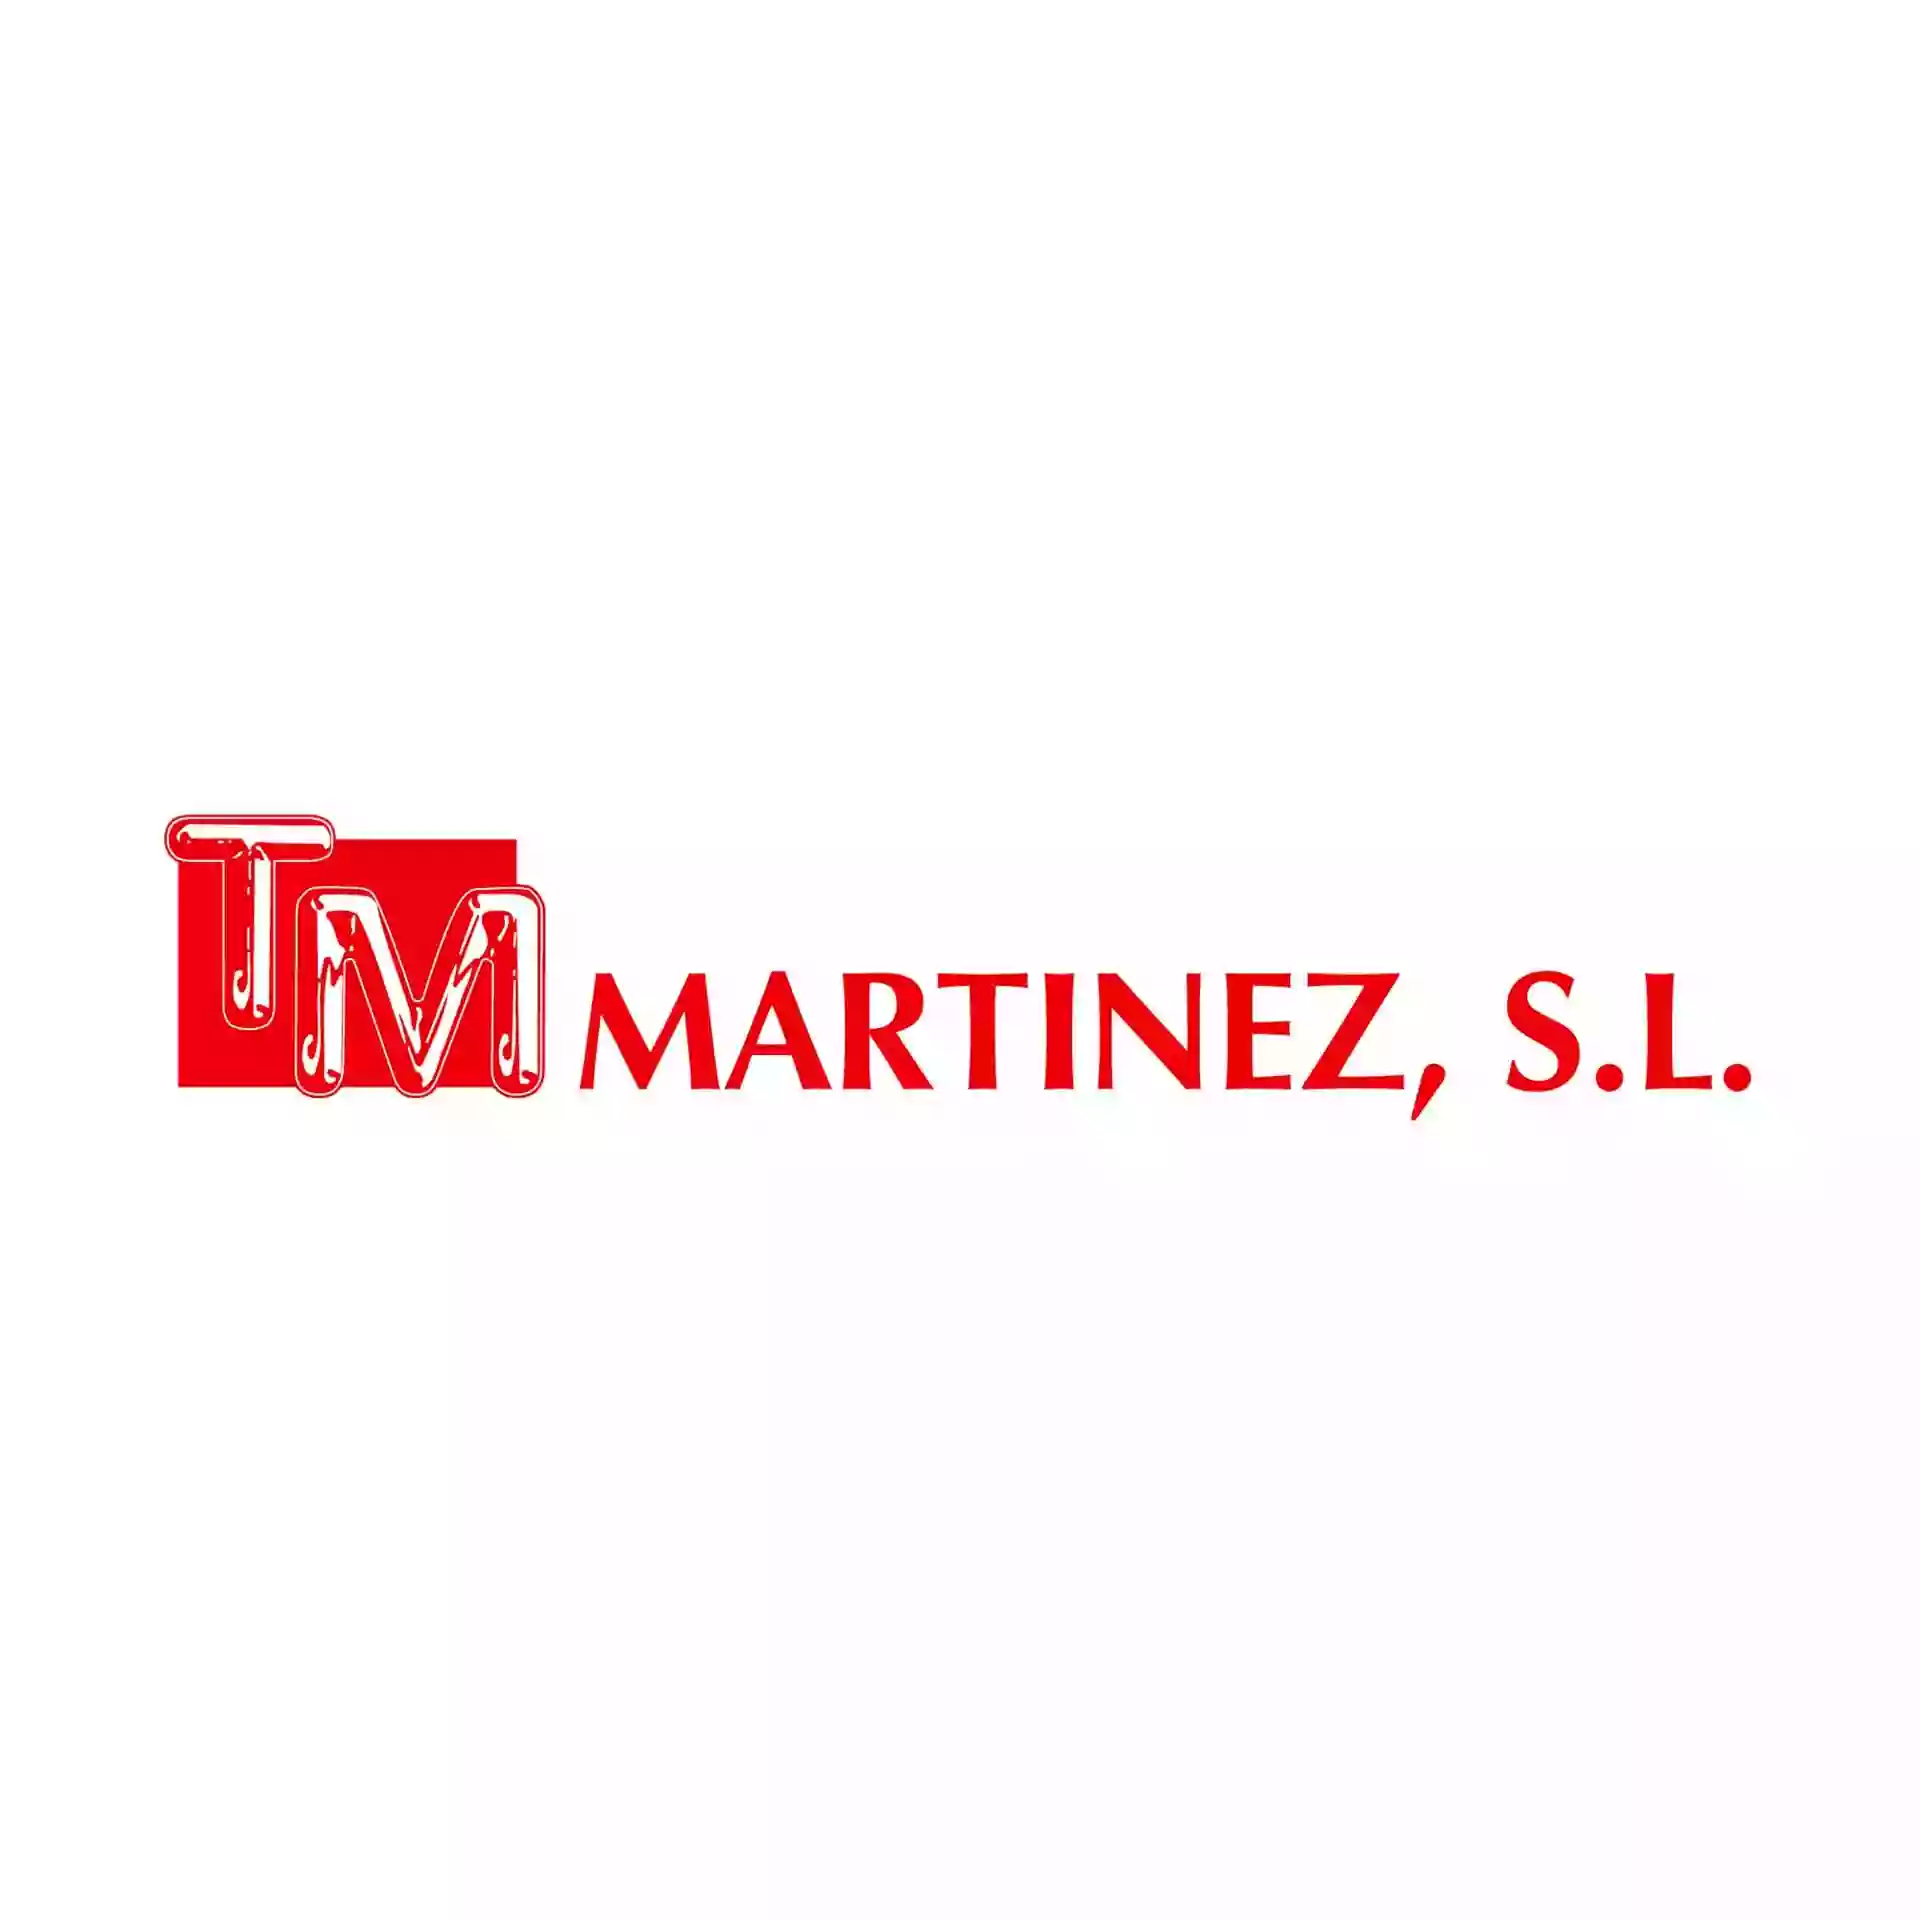 TM Martinez